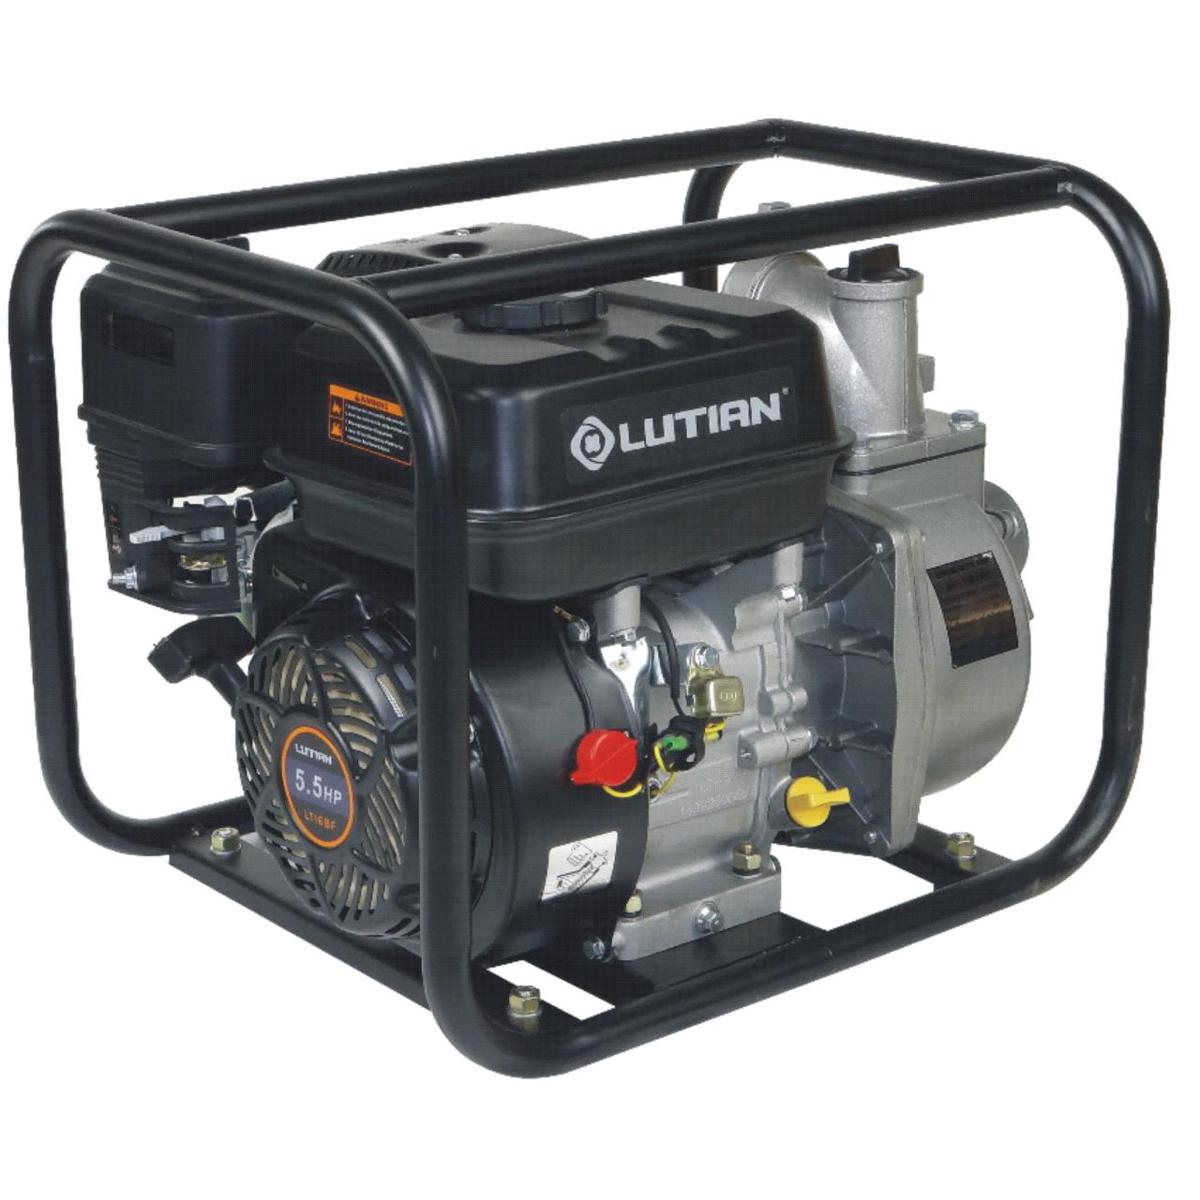 LUTIAN - LT20CX - Water Pump 2 inch (2x2) - Petrol Engine Driven - DeWatering Engine Pump Portable